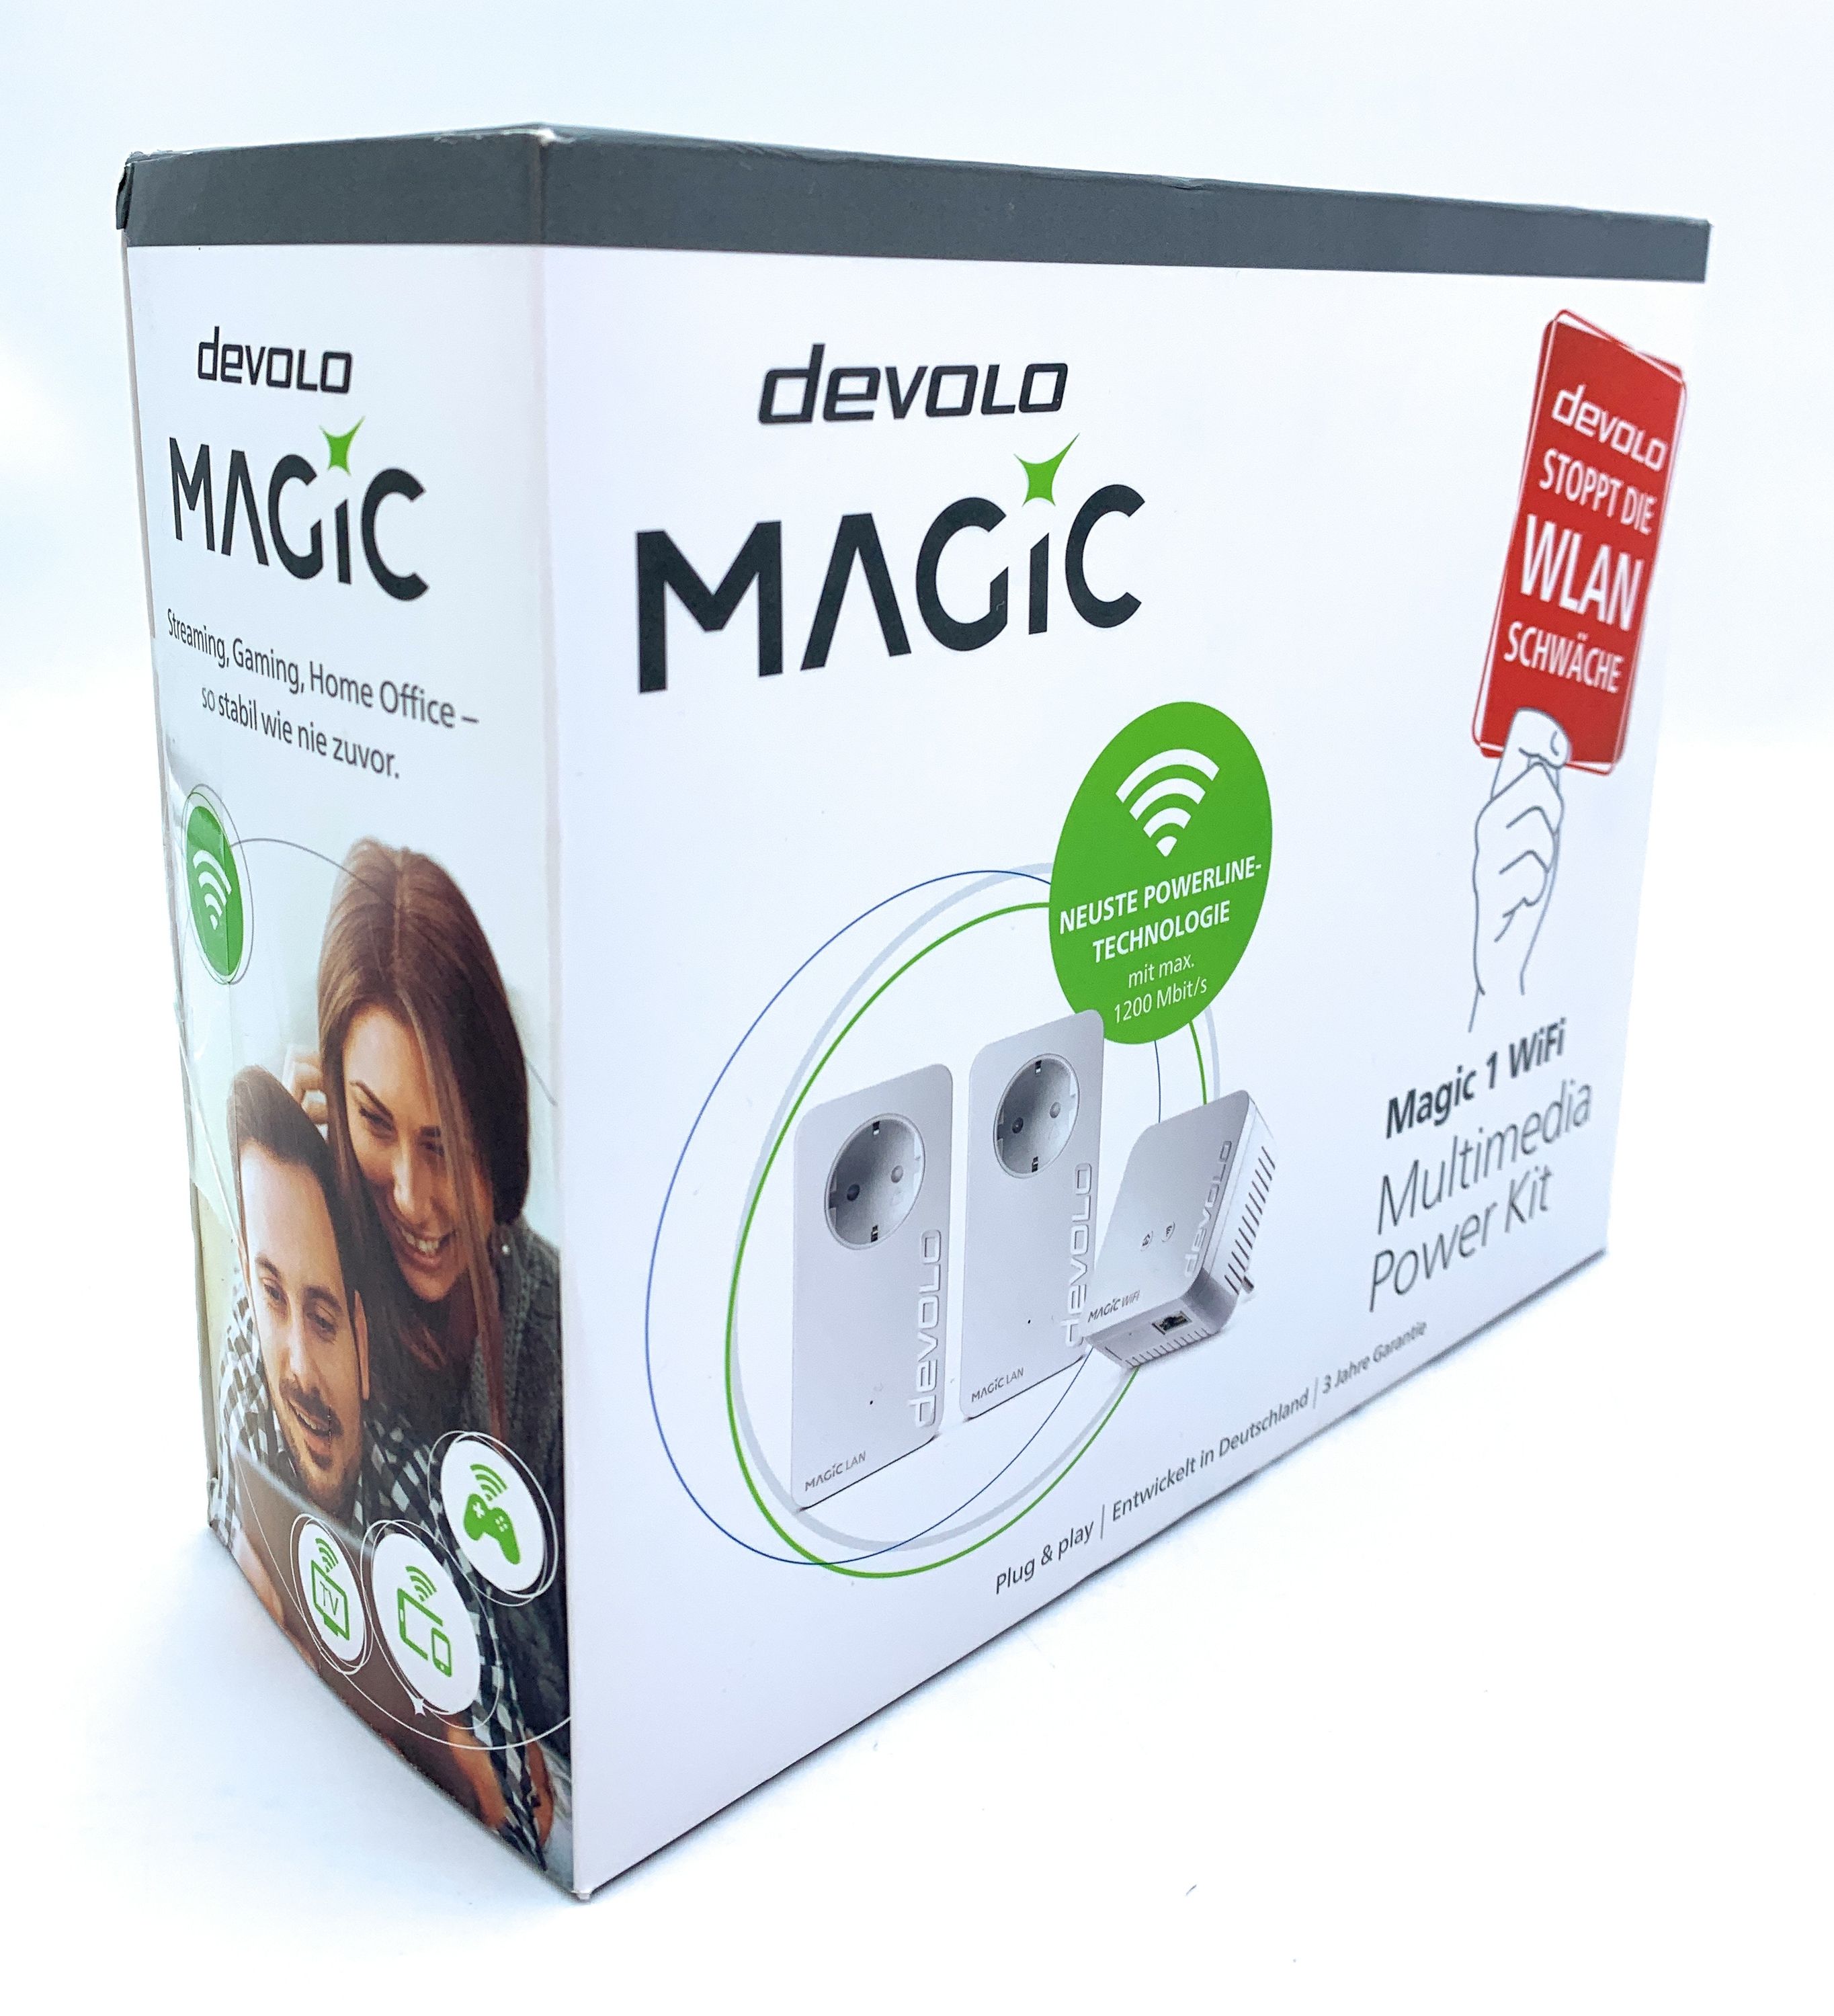 Devolo Magic 1 WiFi Multimedia Power Kit